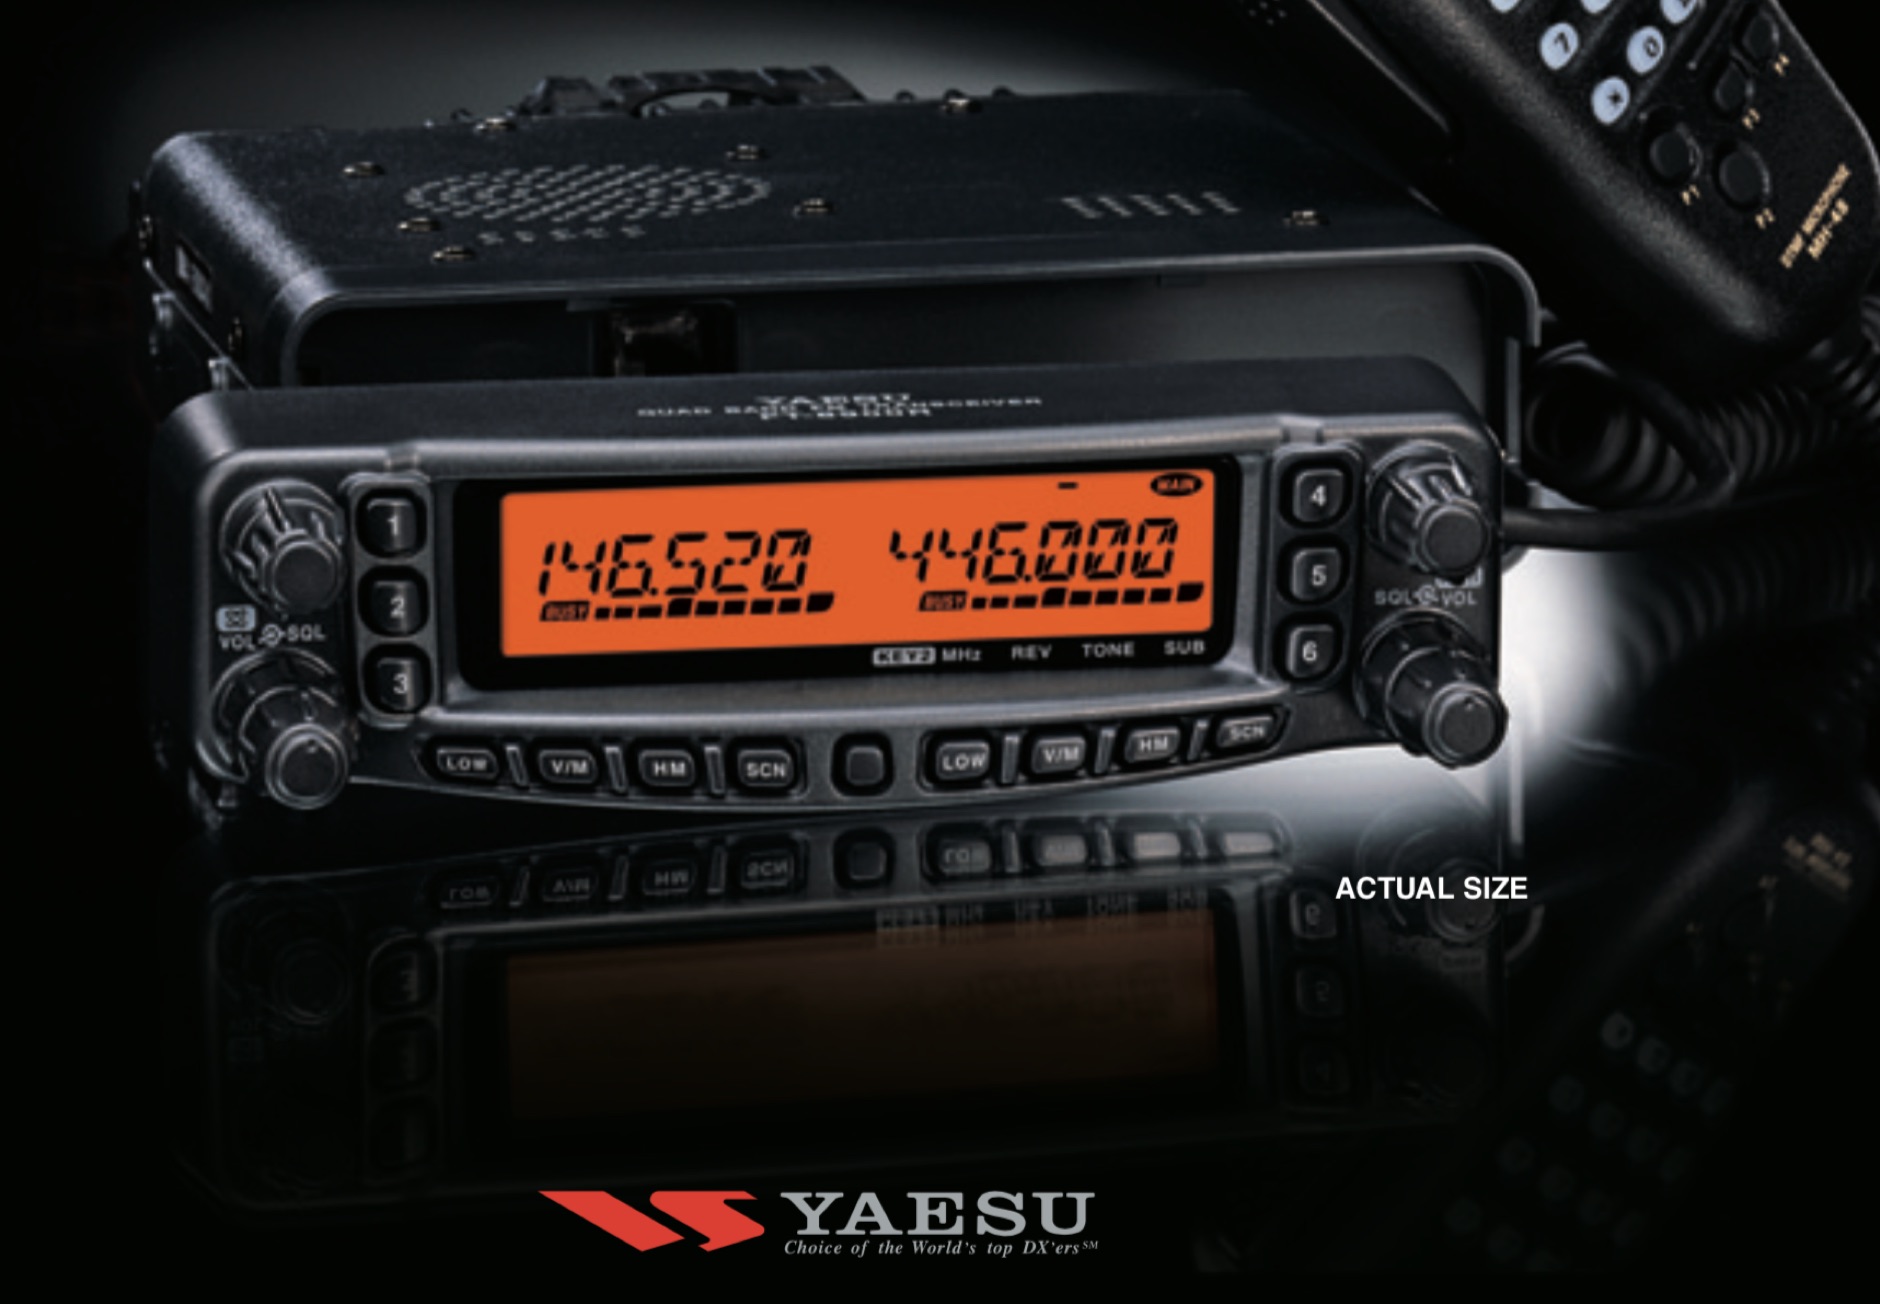 Yaesu FT-8900r Review - Resource Detail - The DXZone.com